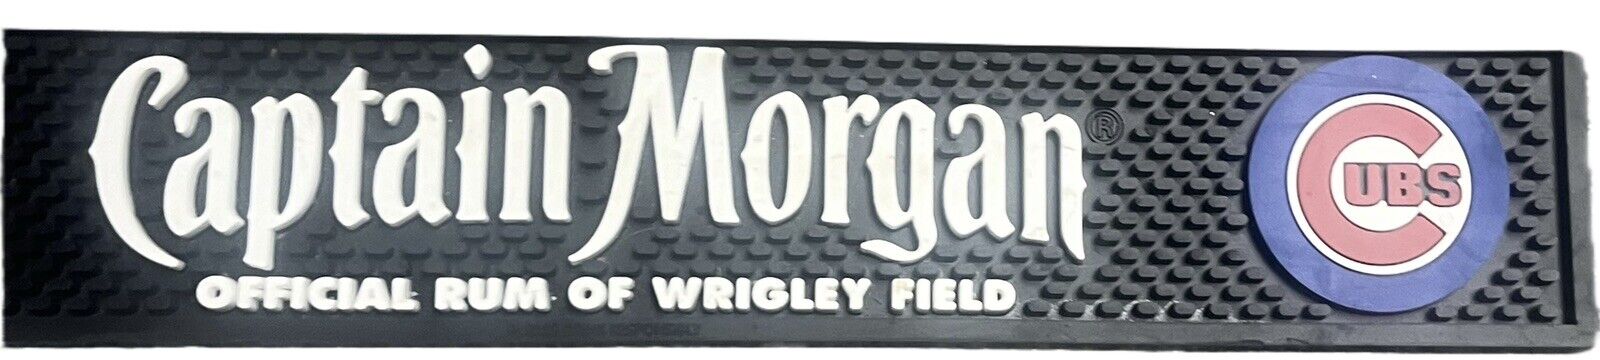 Captain Morgan Chicago Cubs Bar Runner Official Rum Of Wrigley Field